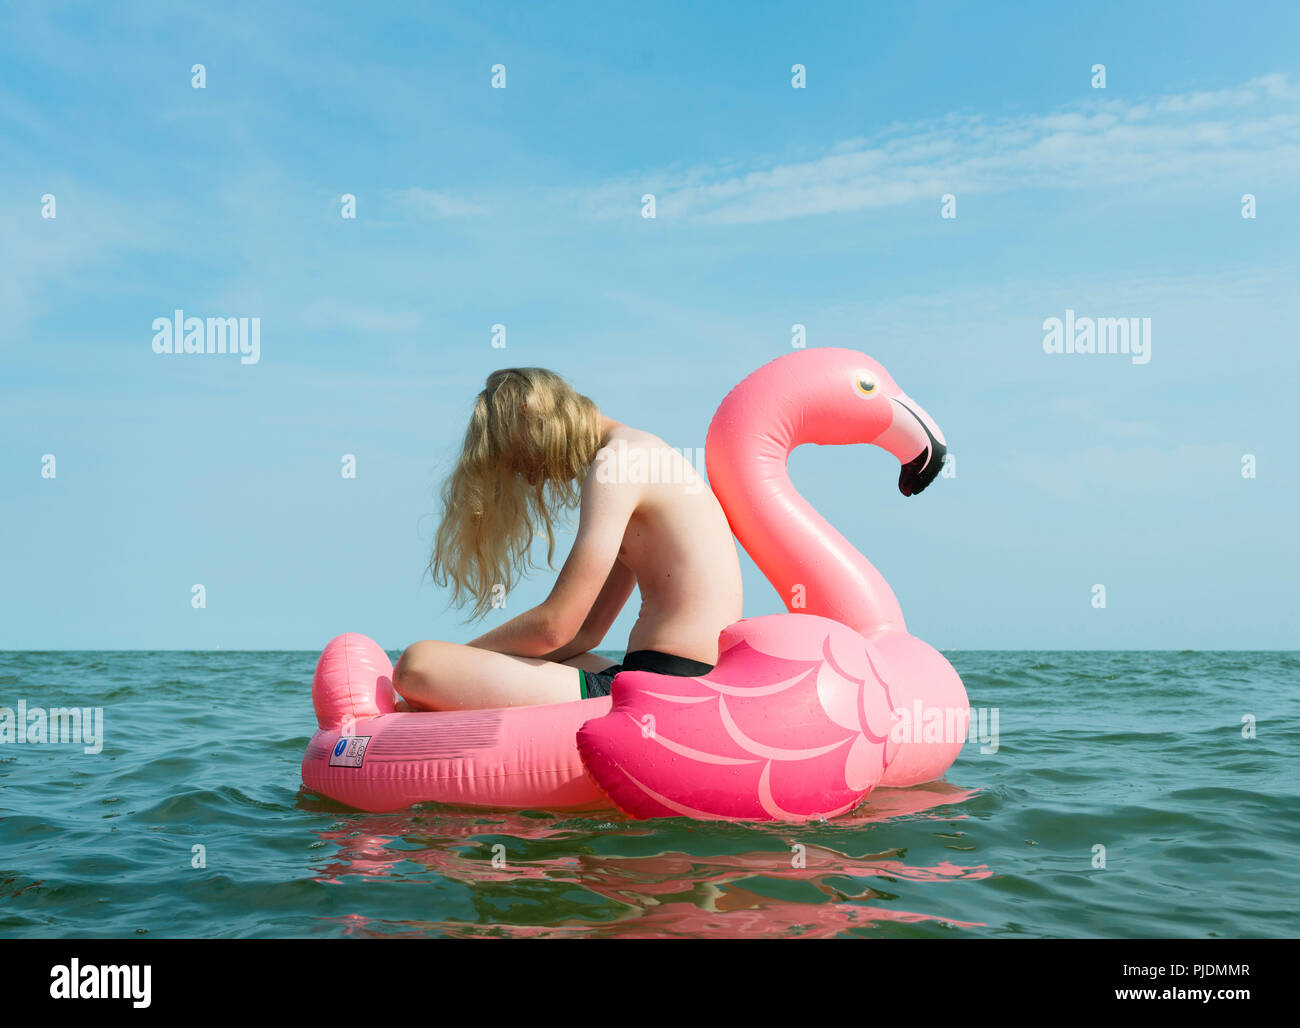 Boy on inflatable flamingo at sea Stock Photo